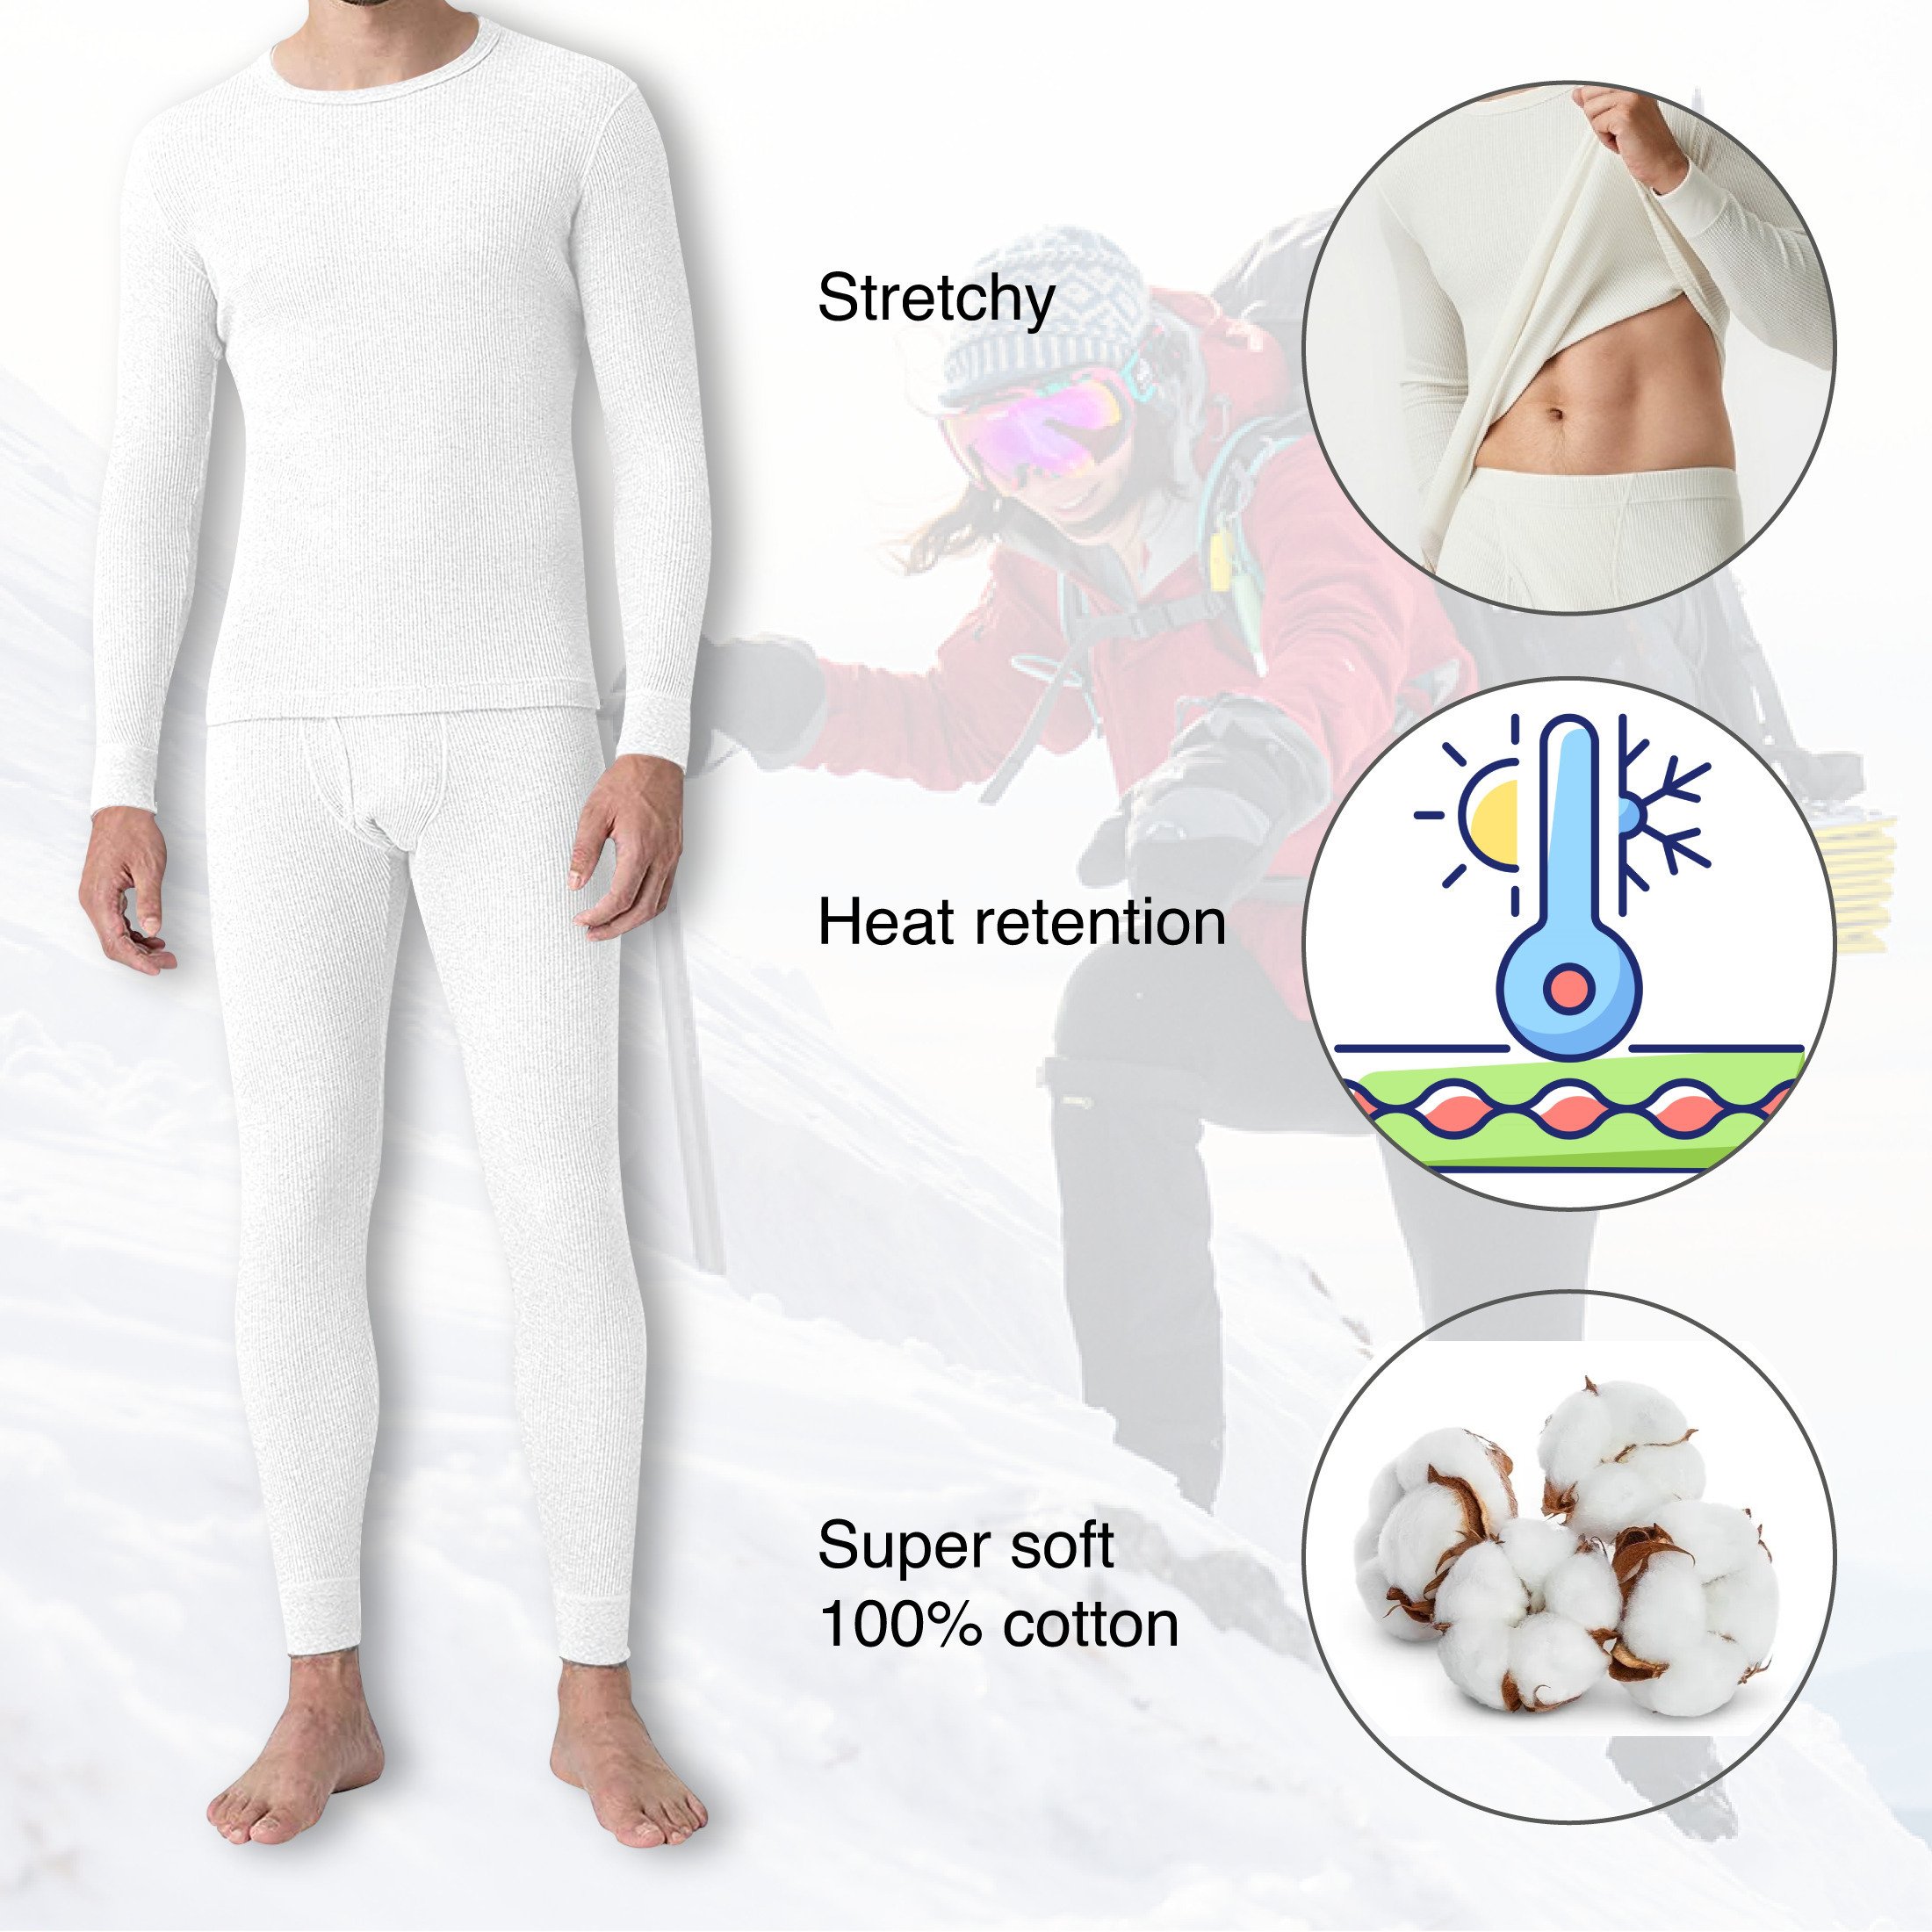 2-Sets: Men's Super Soft Cotton Waffle Knit Winter Thermal Underwear Set - Black & White, 2X-Large